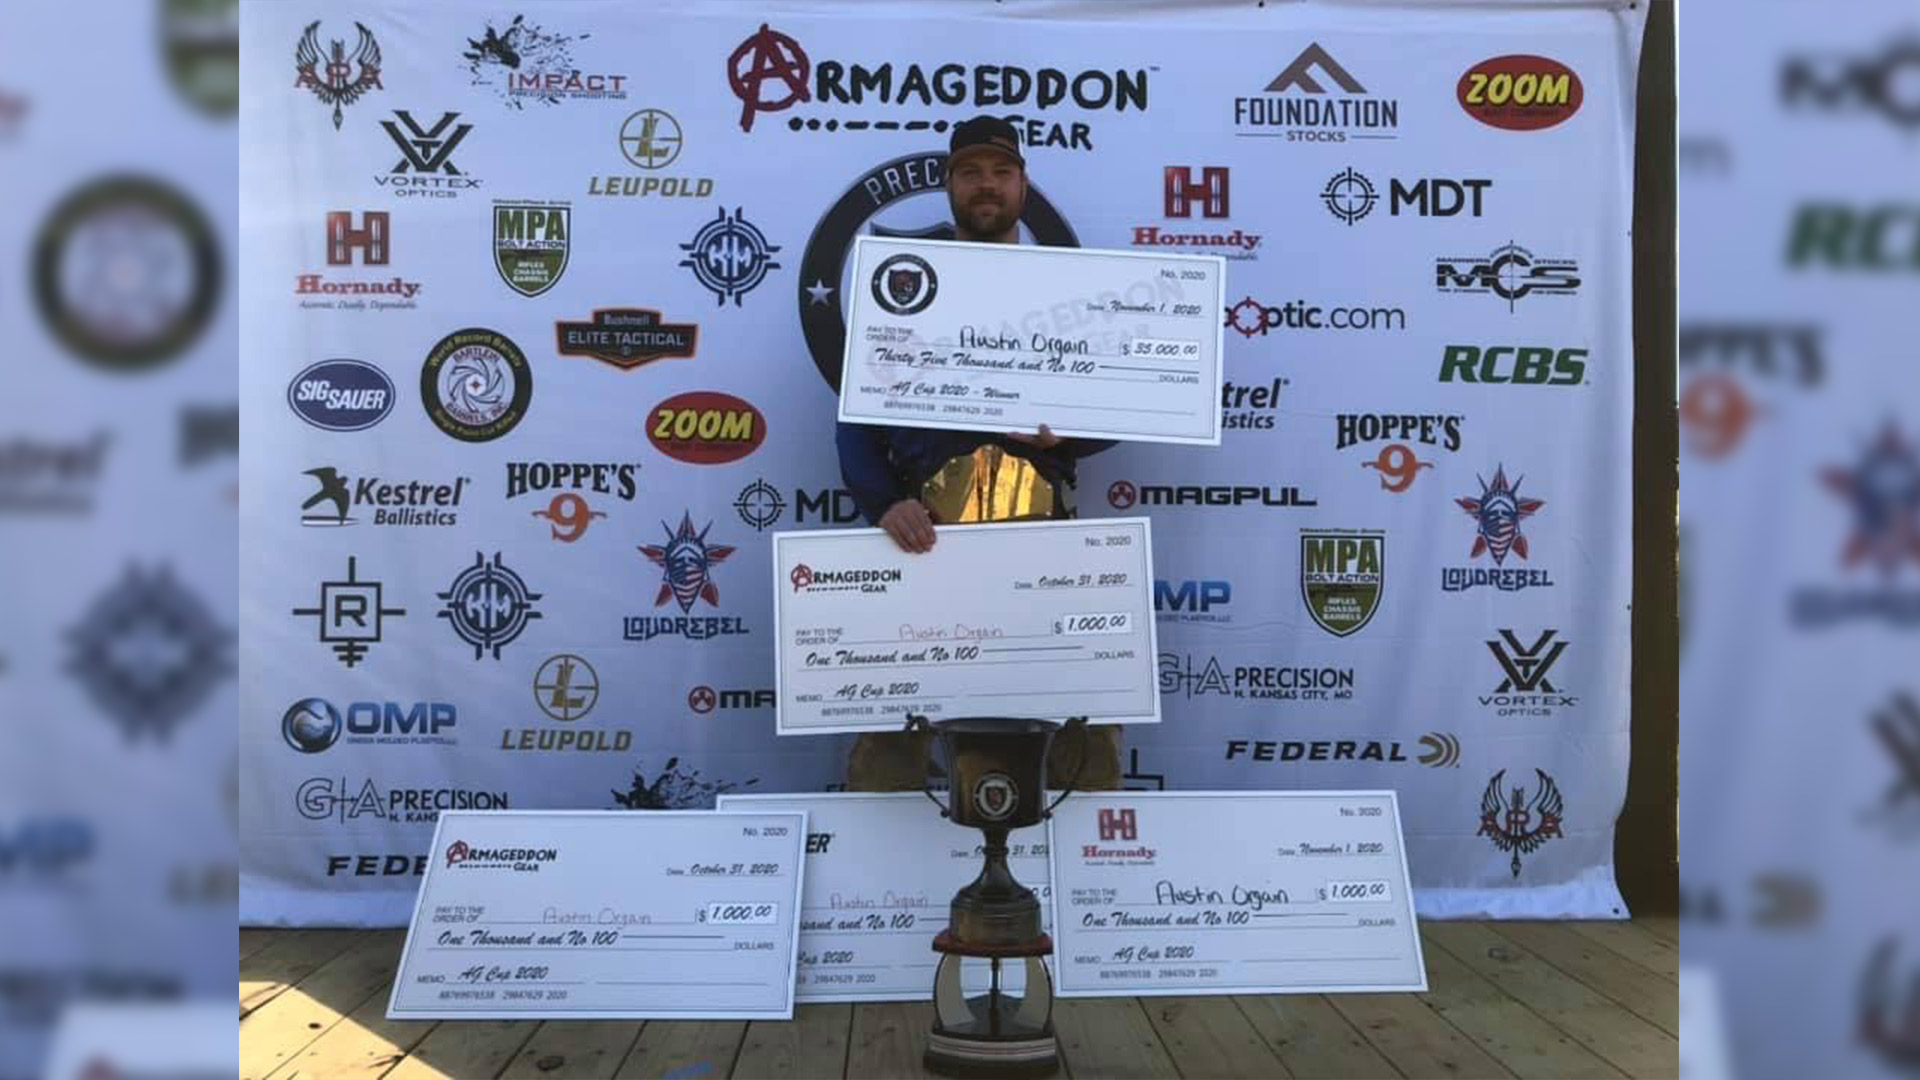 Armageddon Gear Cup winner Austin Orgain